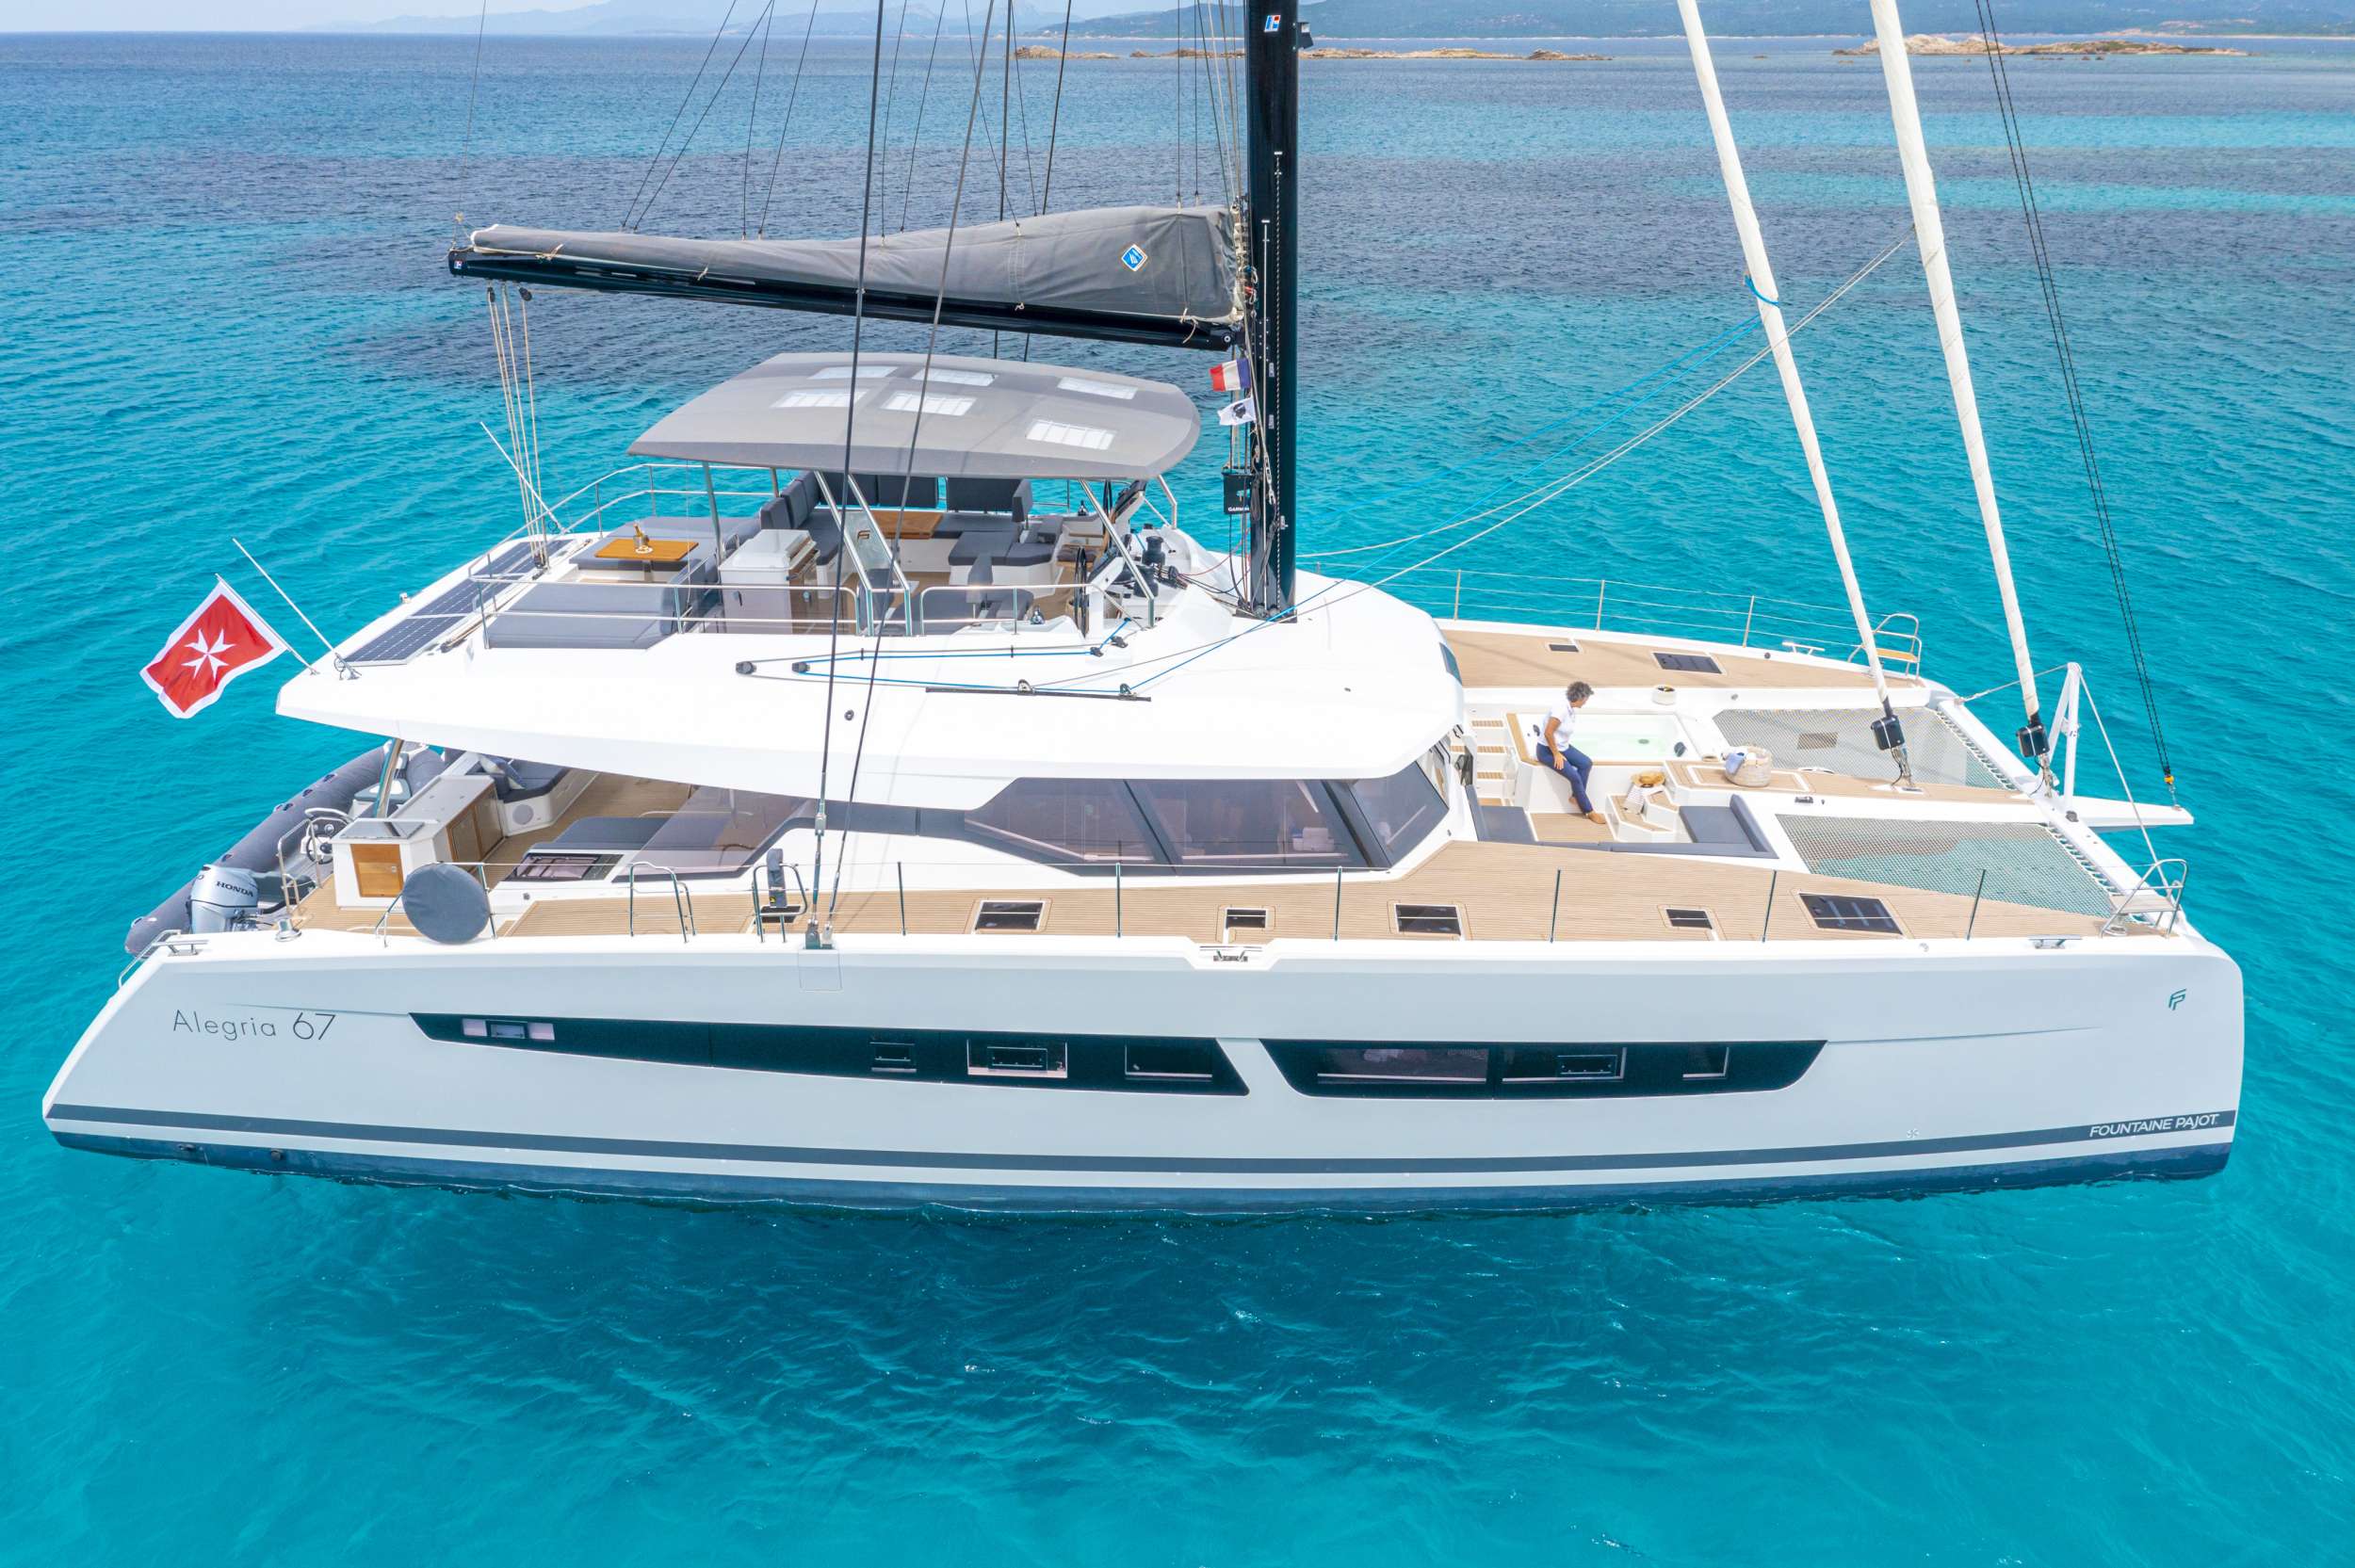 SEMPER FIDELIS  - Luxury yacht charter British Virgin Islands & Boat hire in Bahamas & Caribbean 1